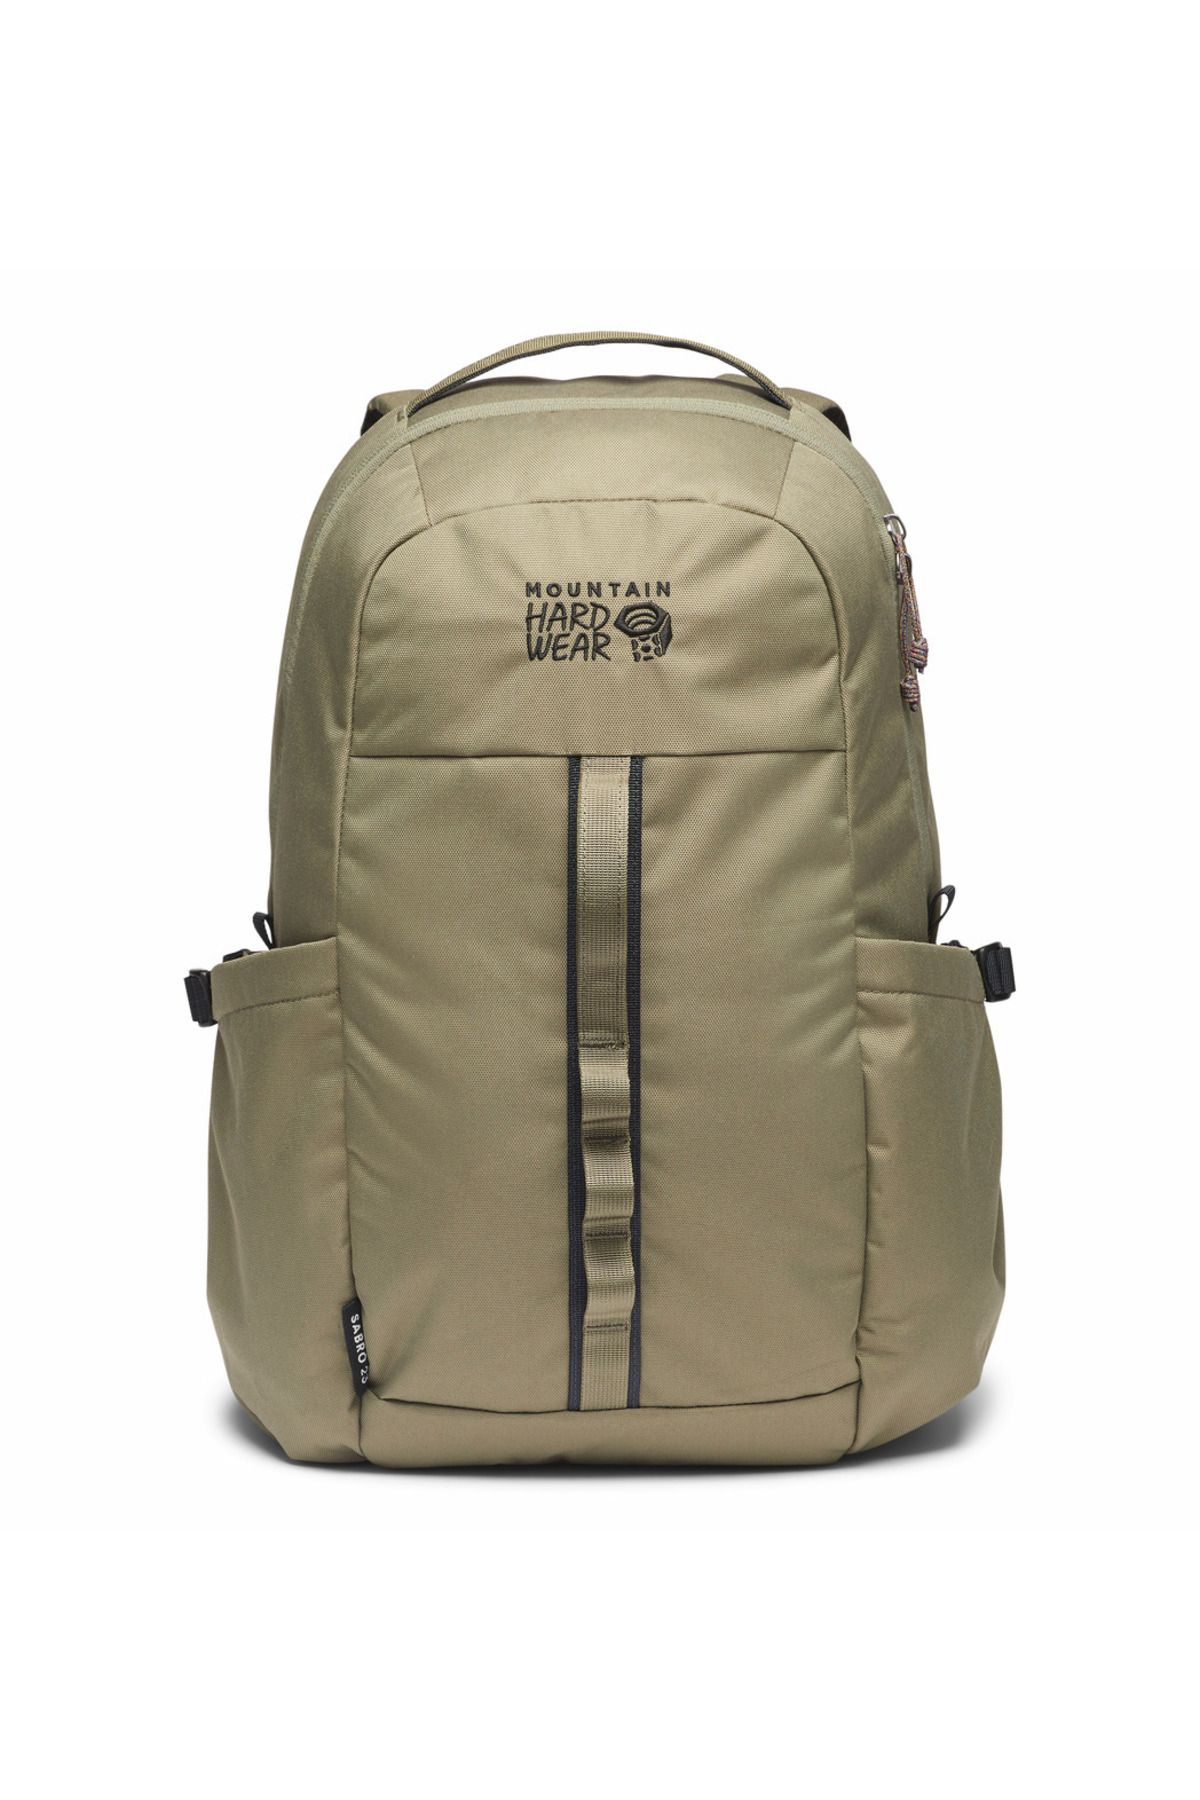 Mountain Hardwear Ou3698 Sabro Backpack